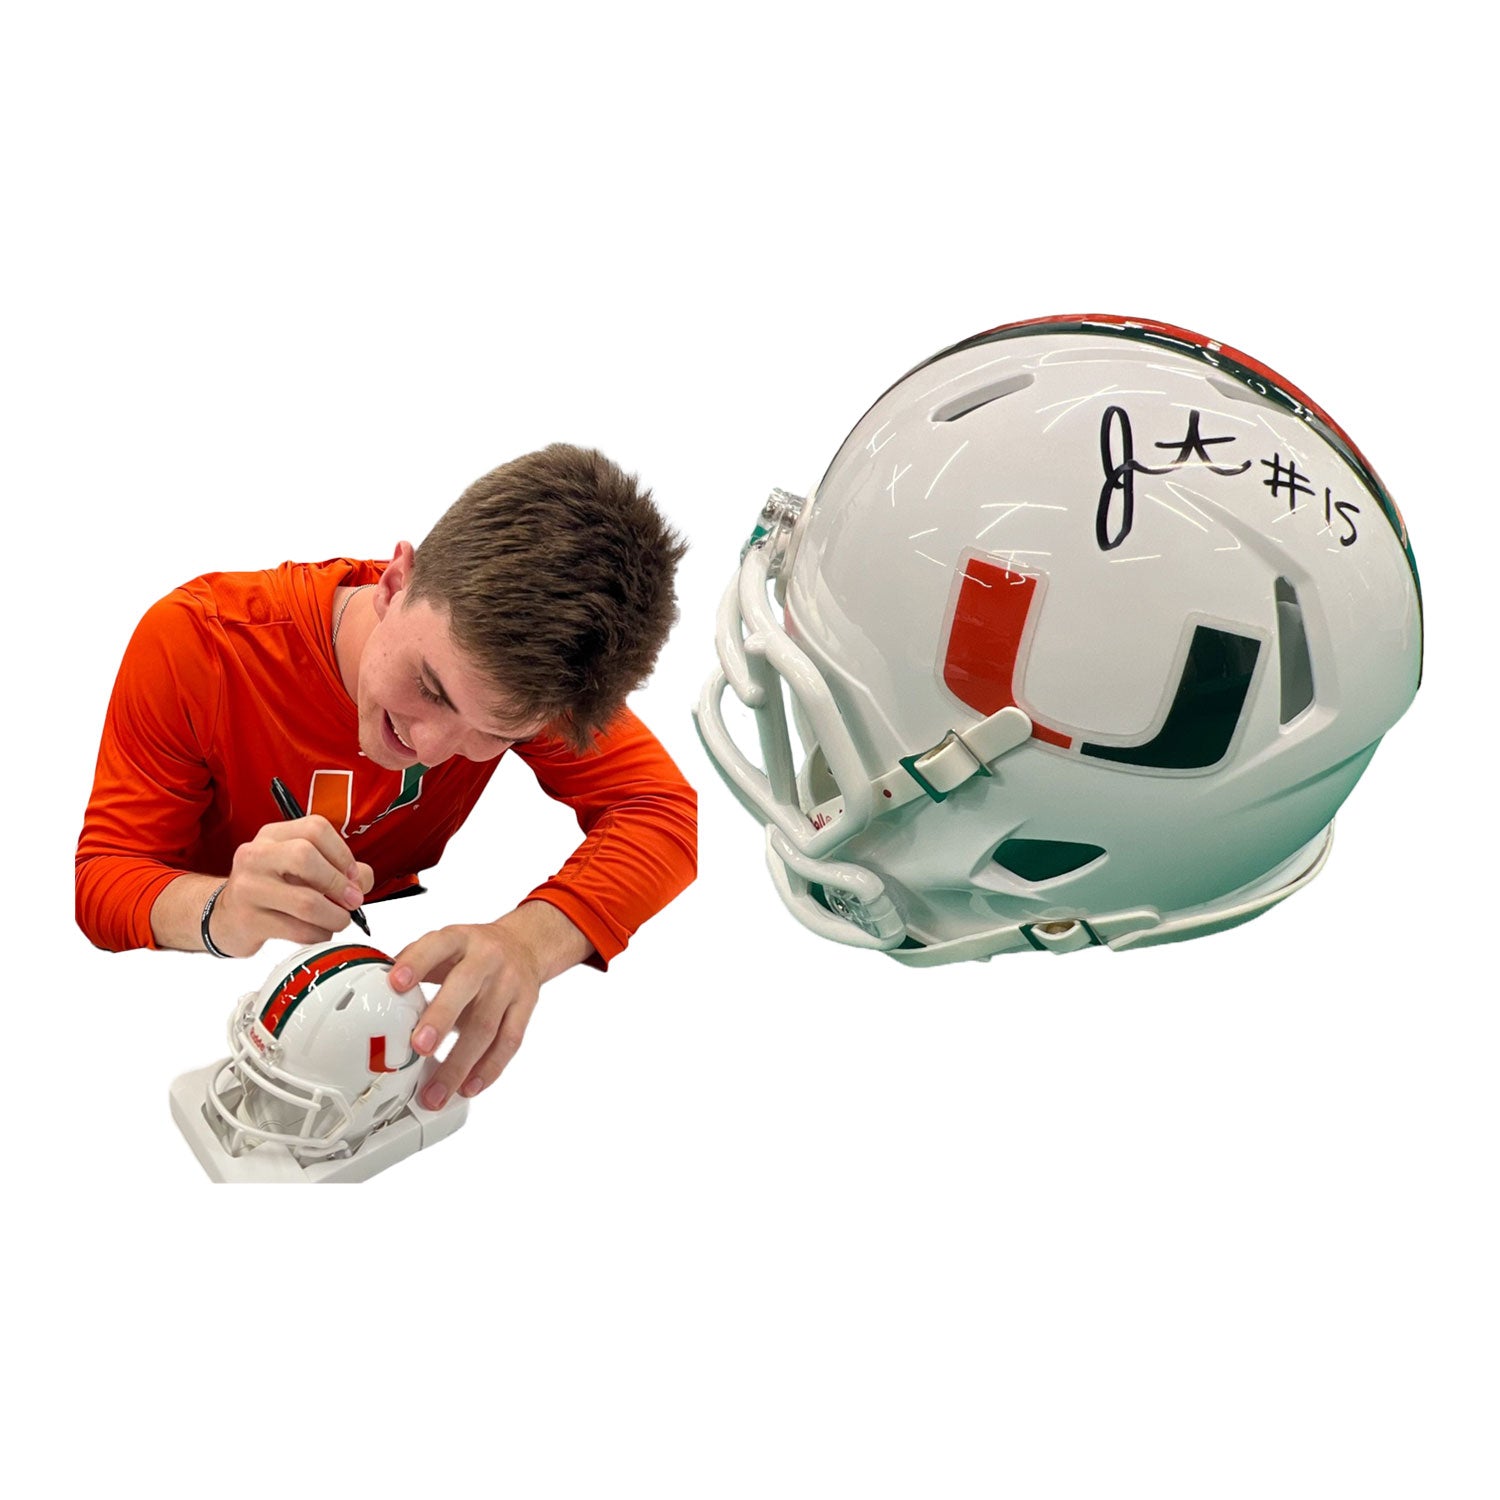 Miami Hurricanes Student Athlete #15 Judd Anderson Mini Football Helmet - Main View